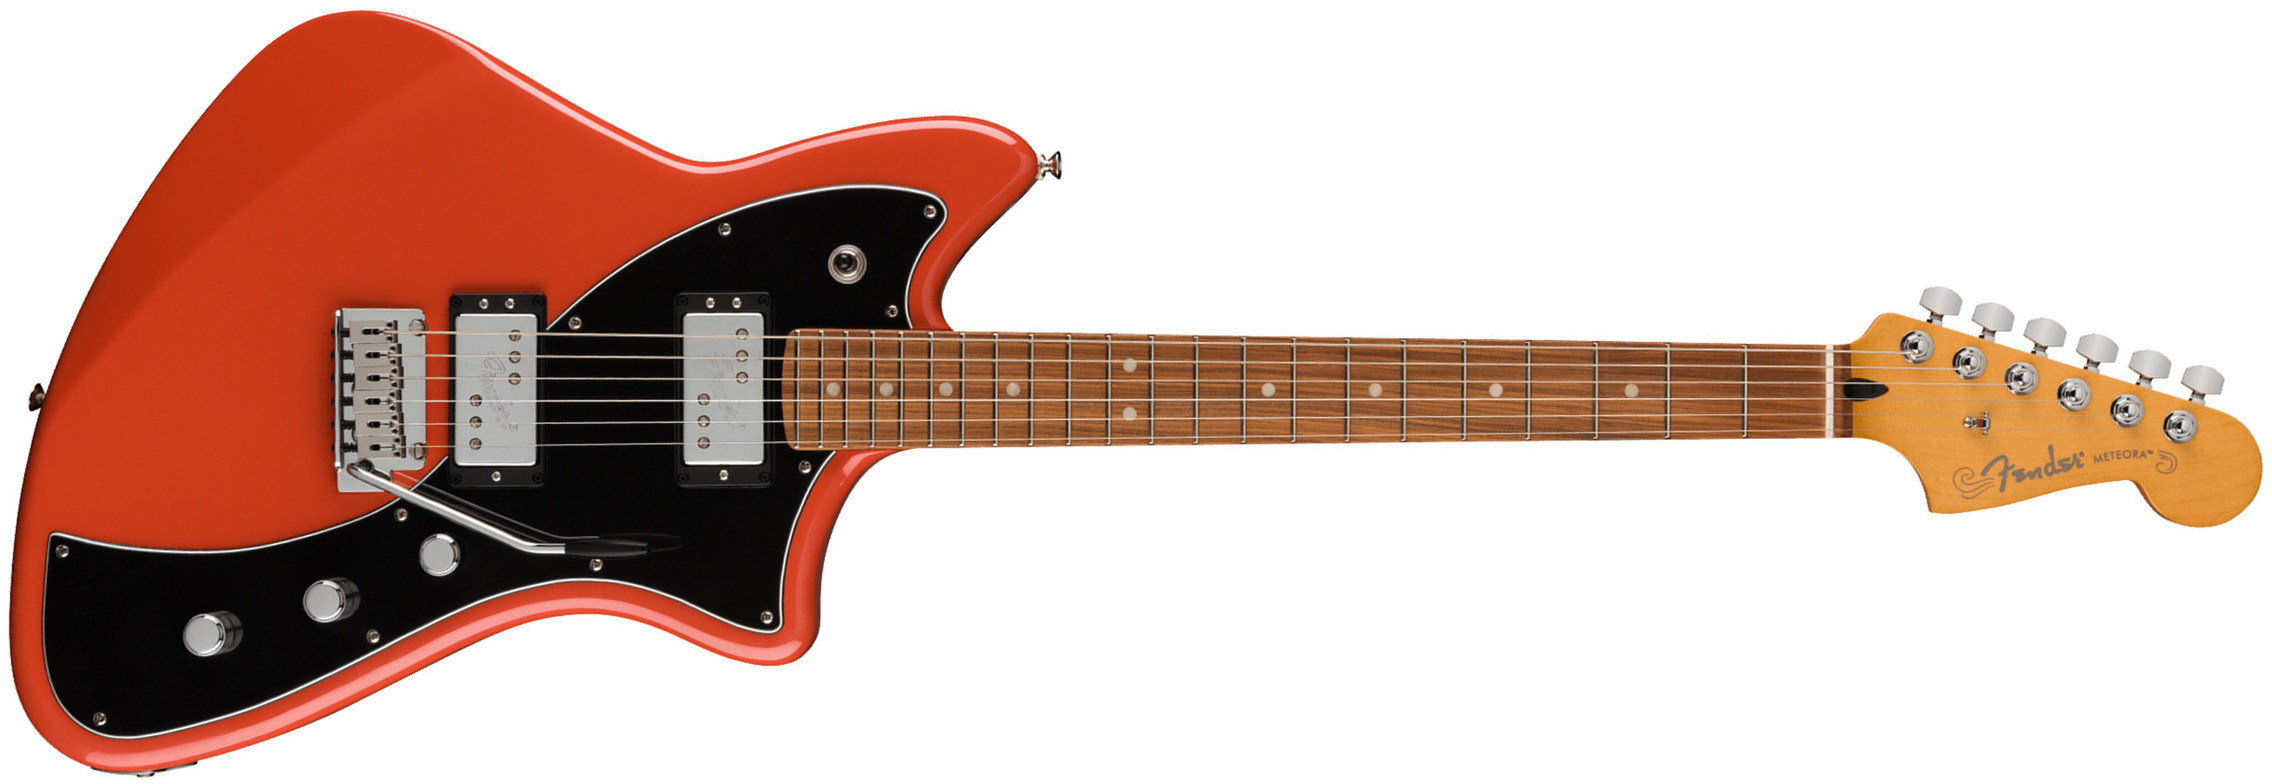 Fender Meteora Player Plus Hh Mex 2023 2s Ht Pf - Fiesta Red - Retro rock electric guitar - Main picture